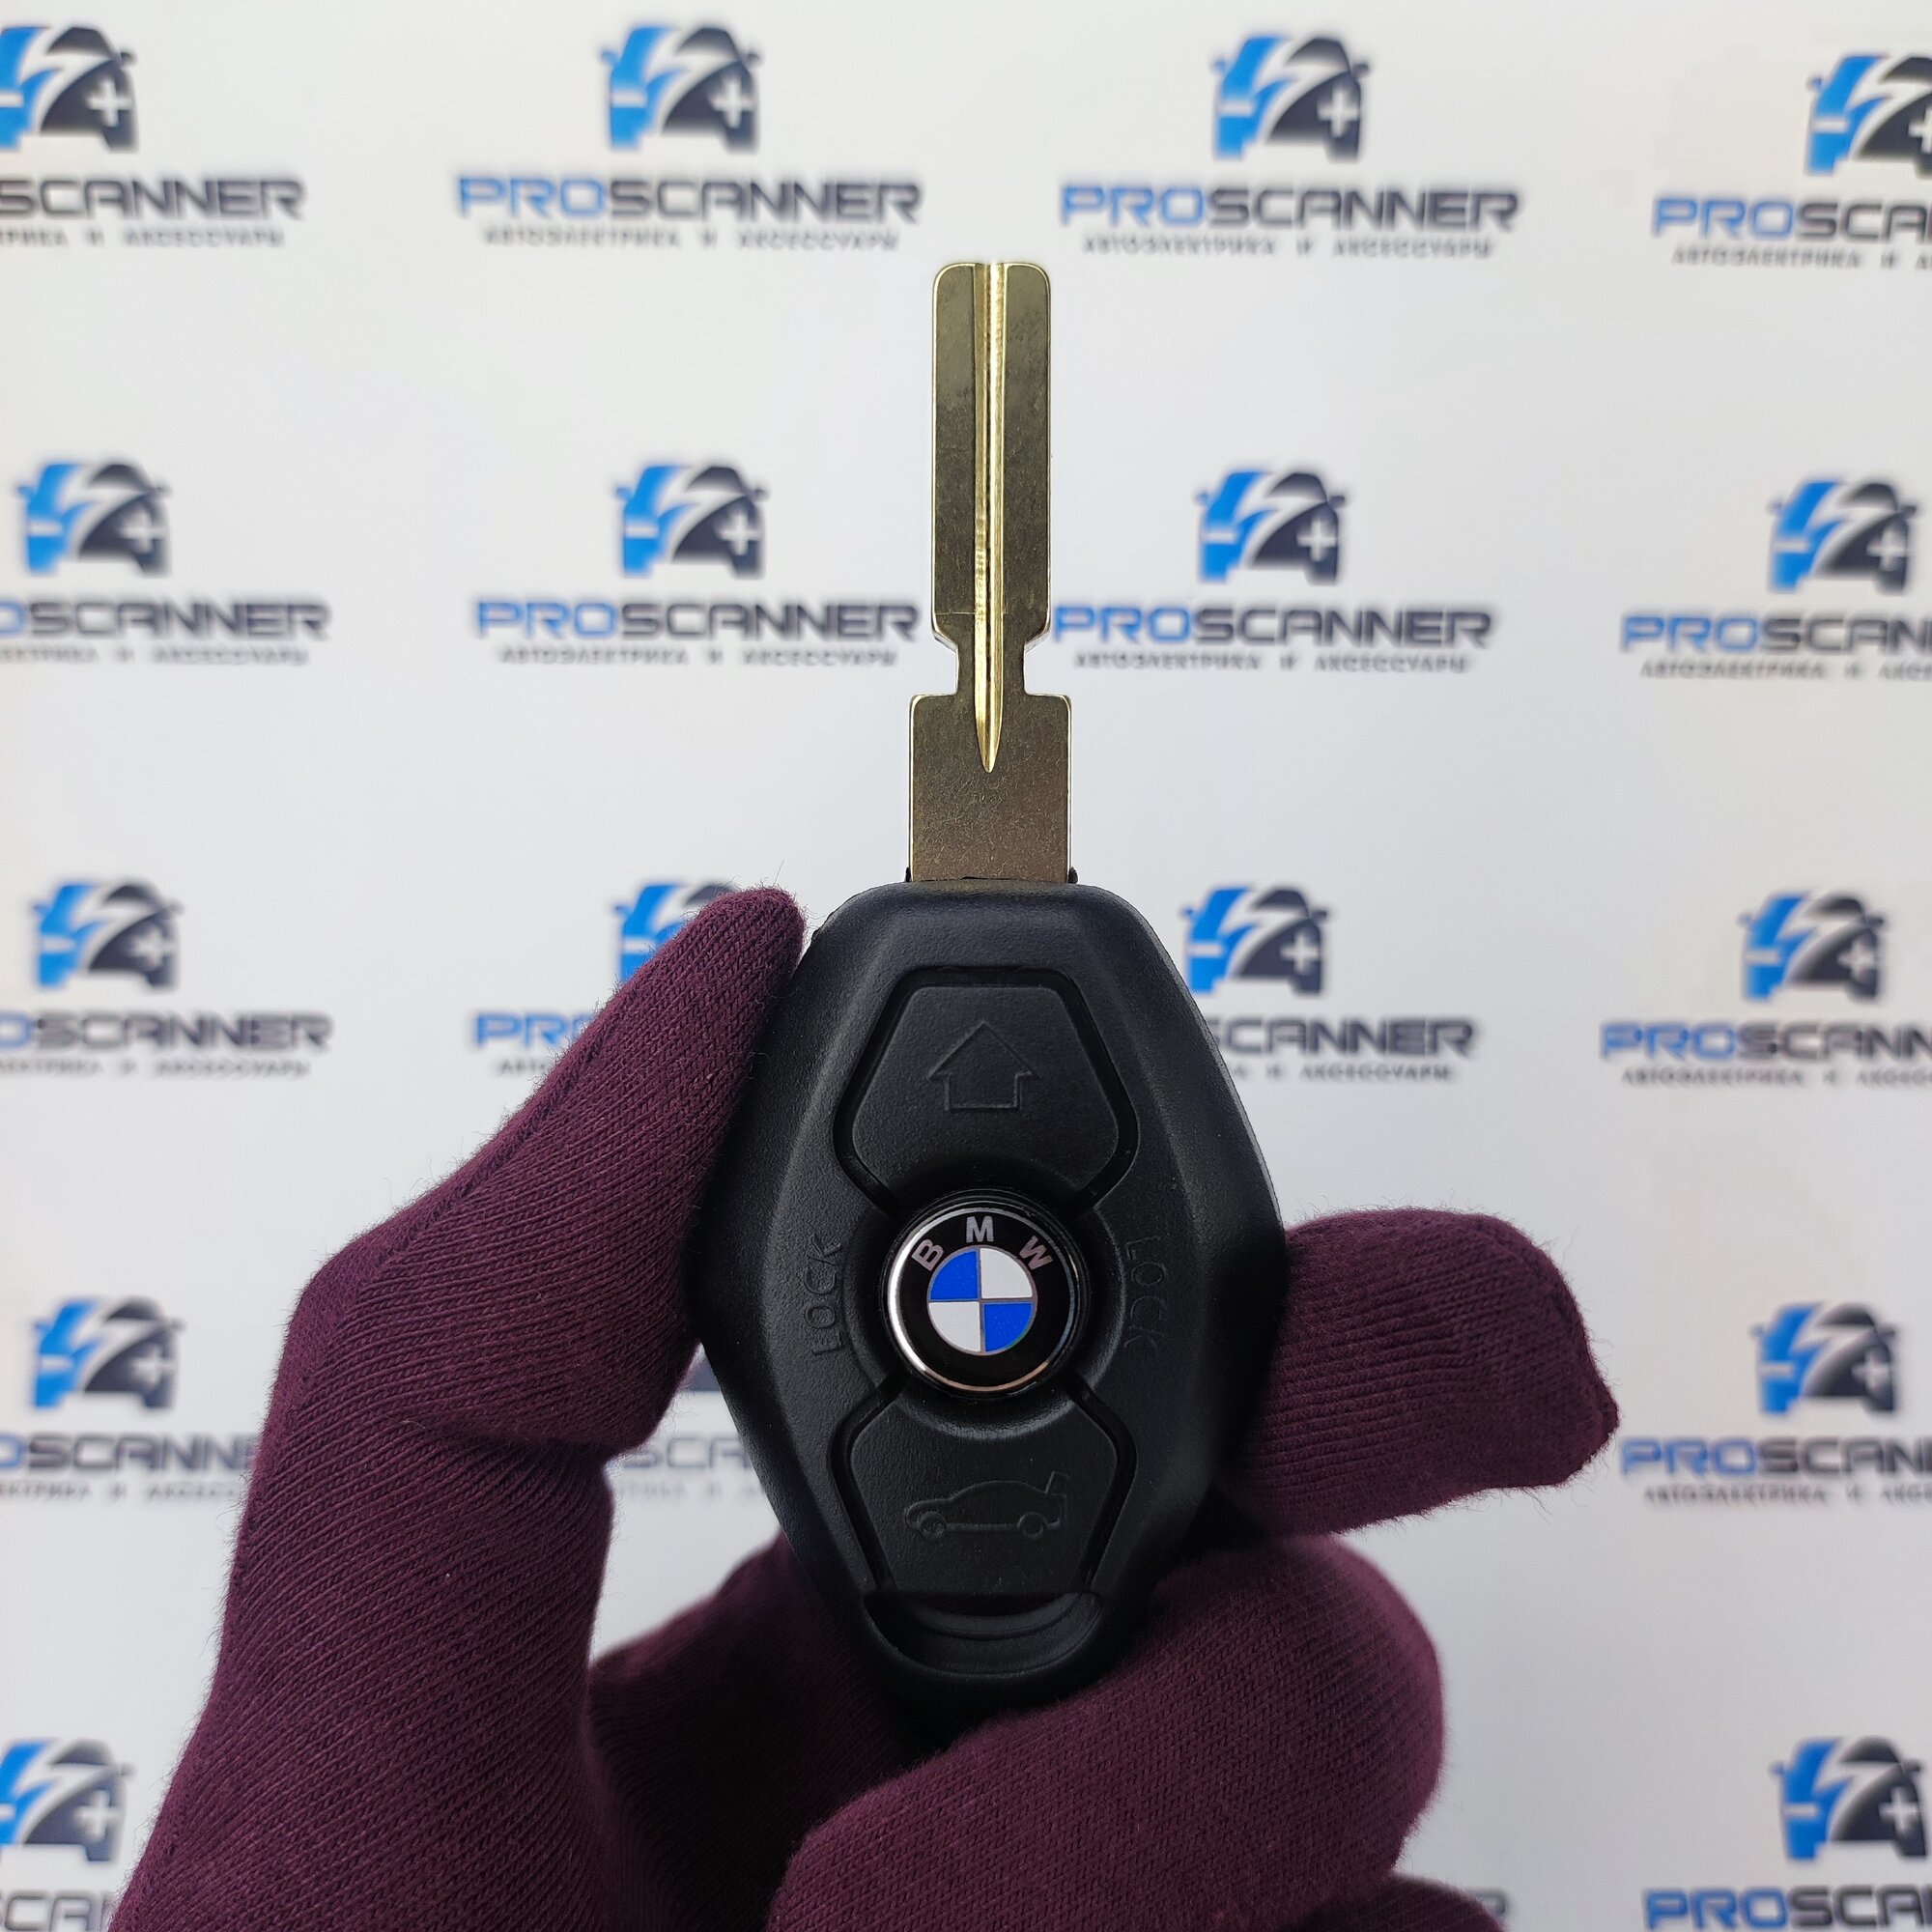 Корпус ключа зажигания зажигания для БМВ BMW E серии E53 E39 E46 E60 E65 X3 X5 M5 - 1 штука (3х кнопочный ключ, лезвие HU58)